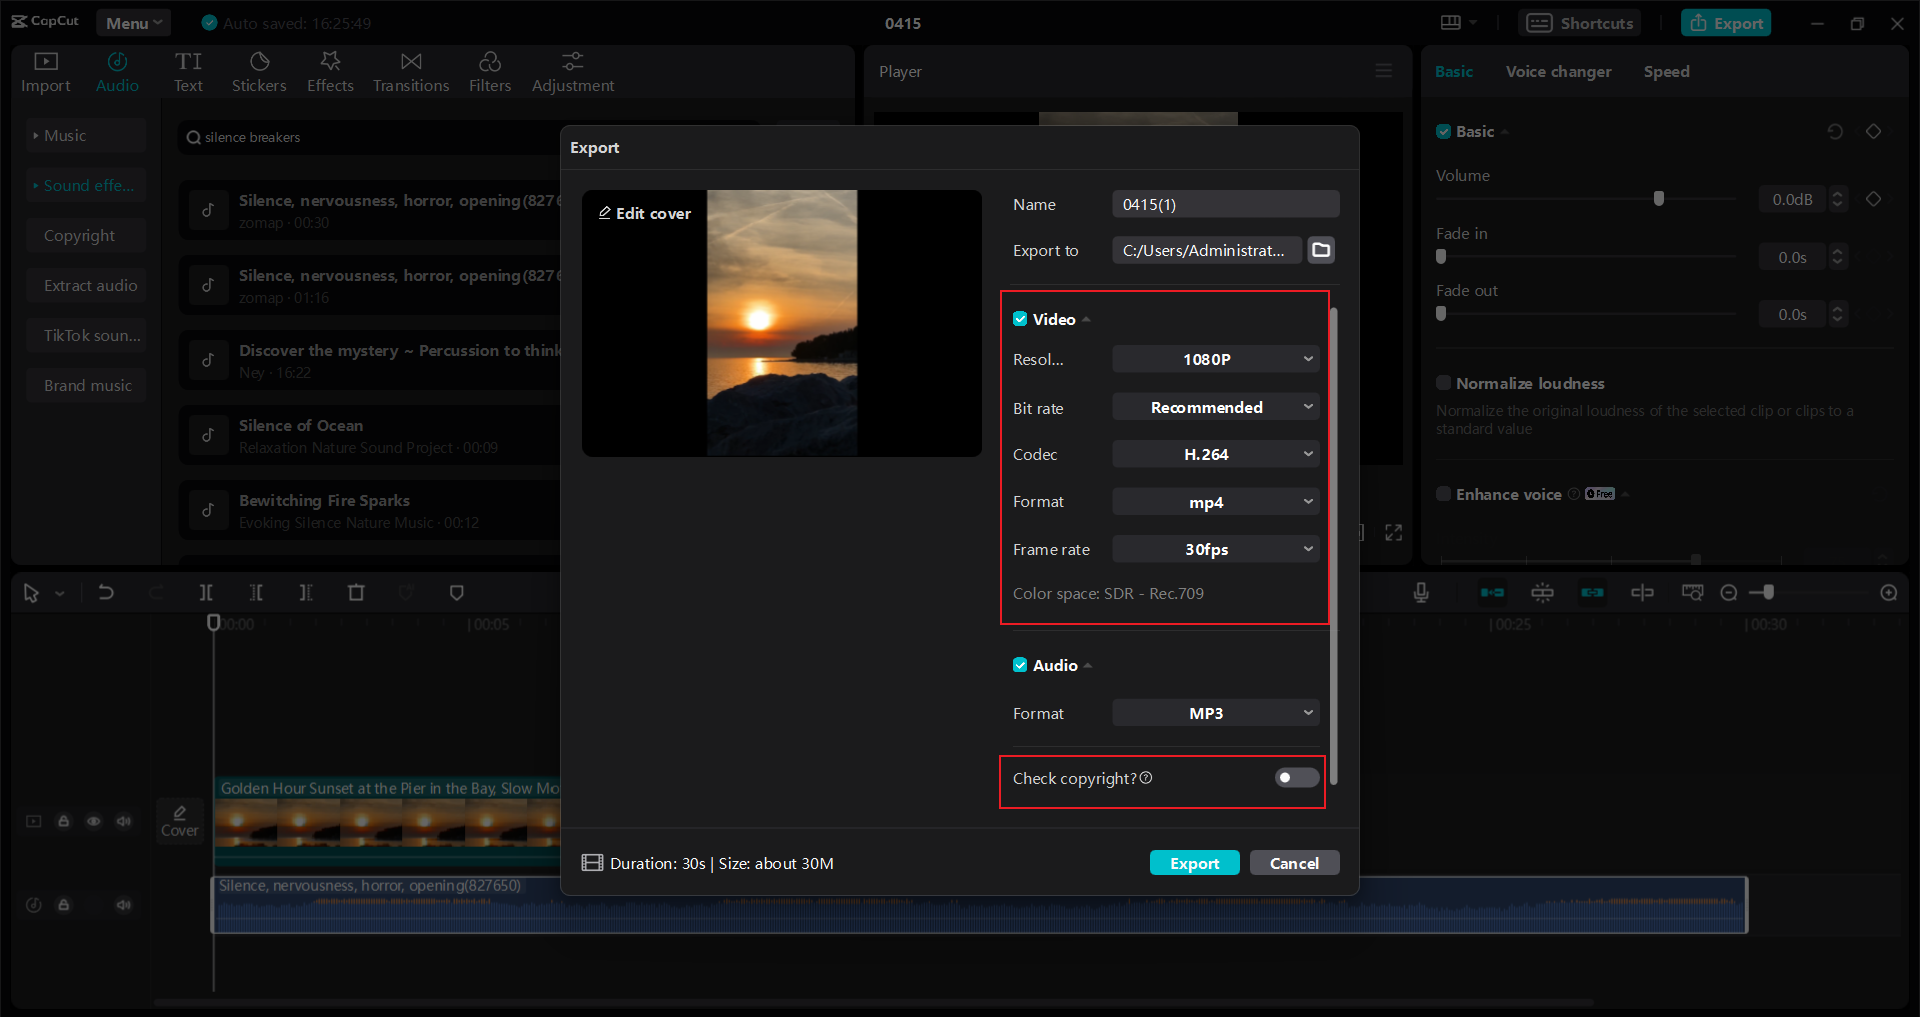 export options on CapCut video editor